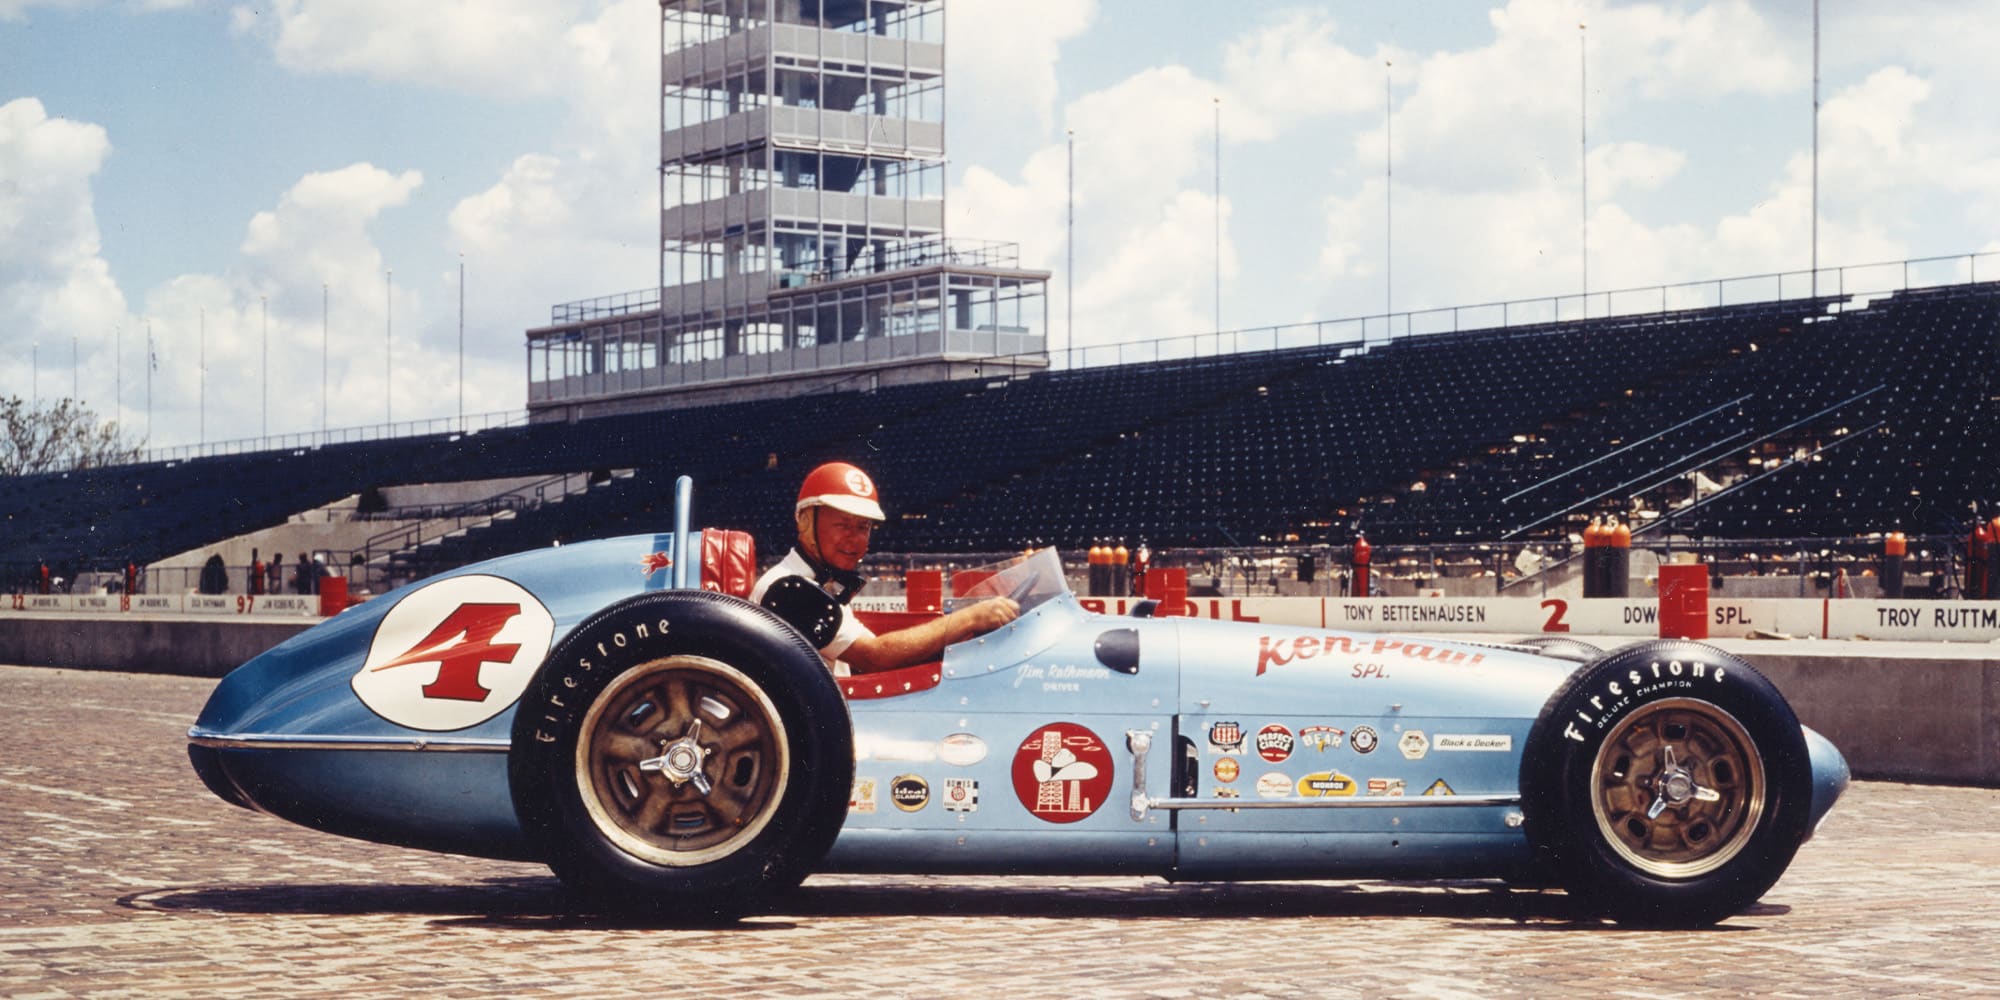 Jim Rathmann in his car portrait shot at the 1960 Indy 500